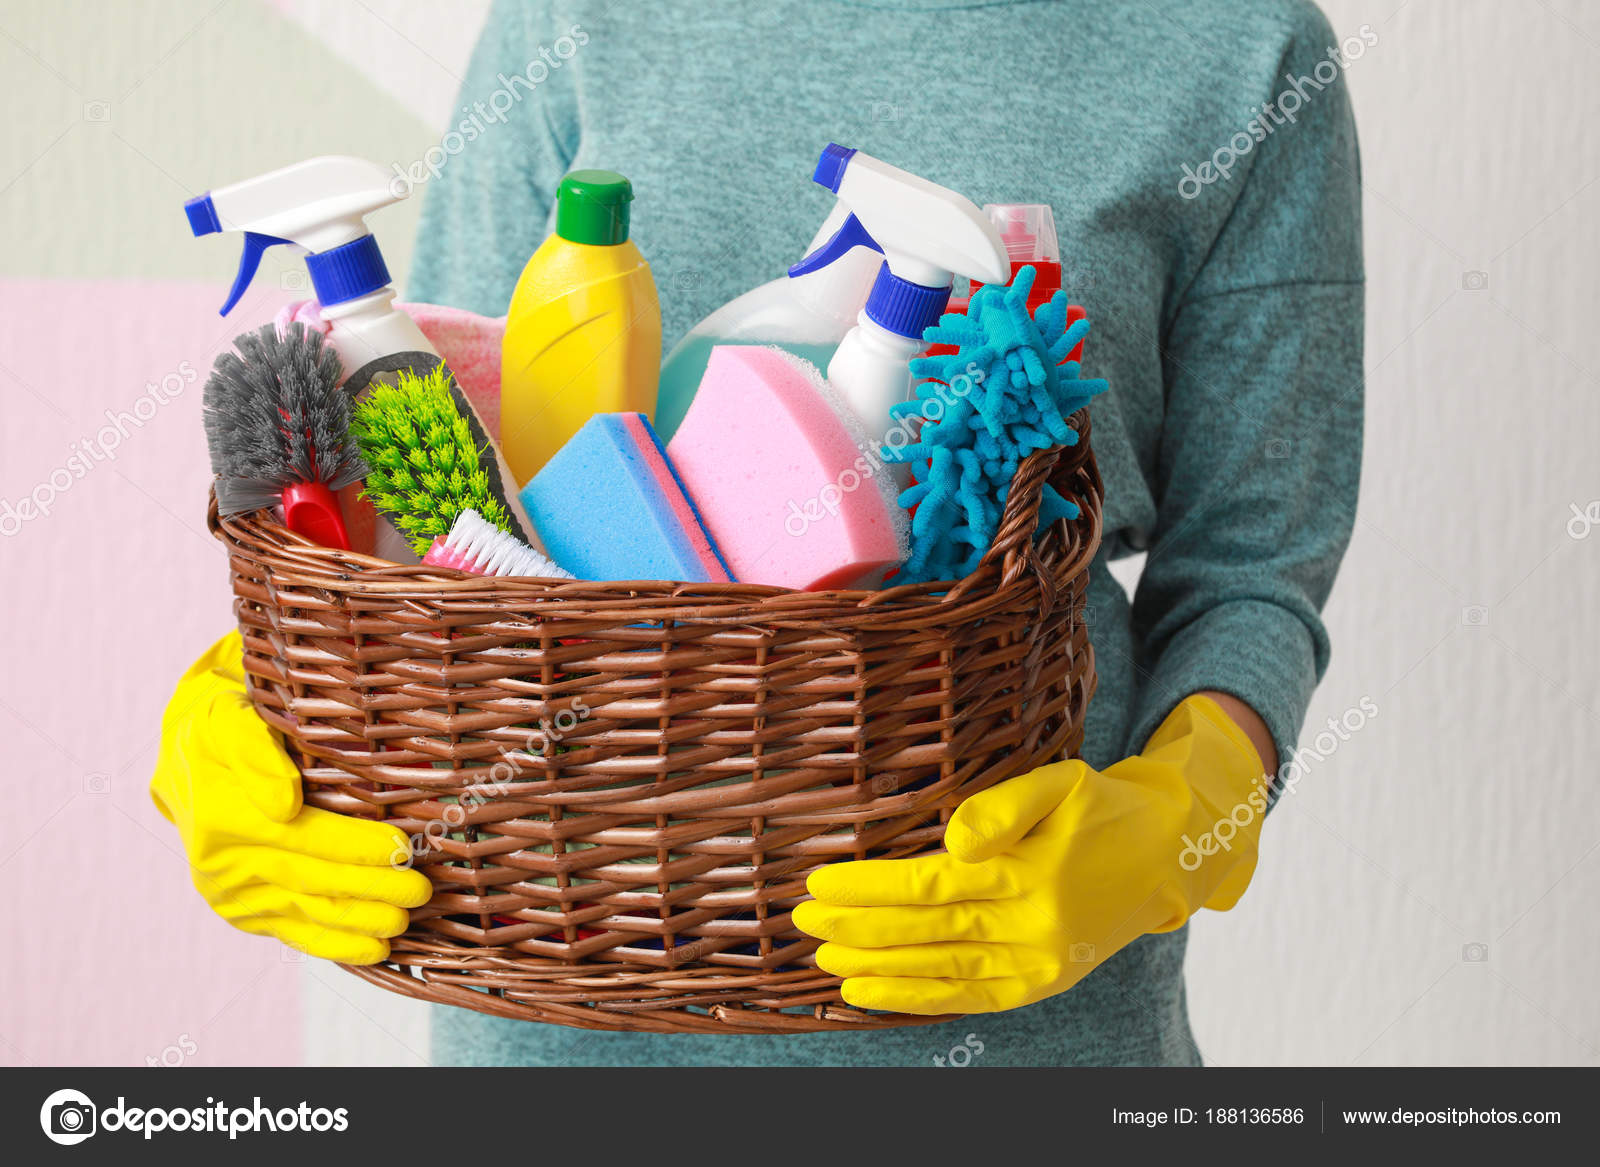 https://st3.depositphotos.com/1177973/18813/i/1600/depositphotos_188136586-stock-photo-woman-holding-basket-with-cleaning.jpg